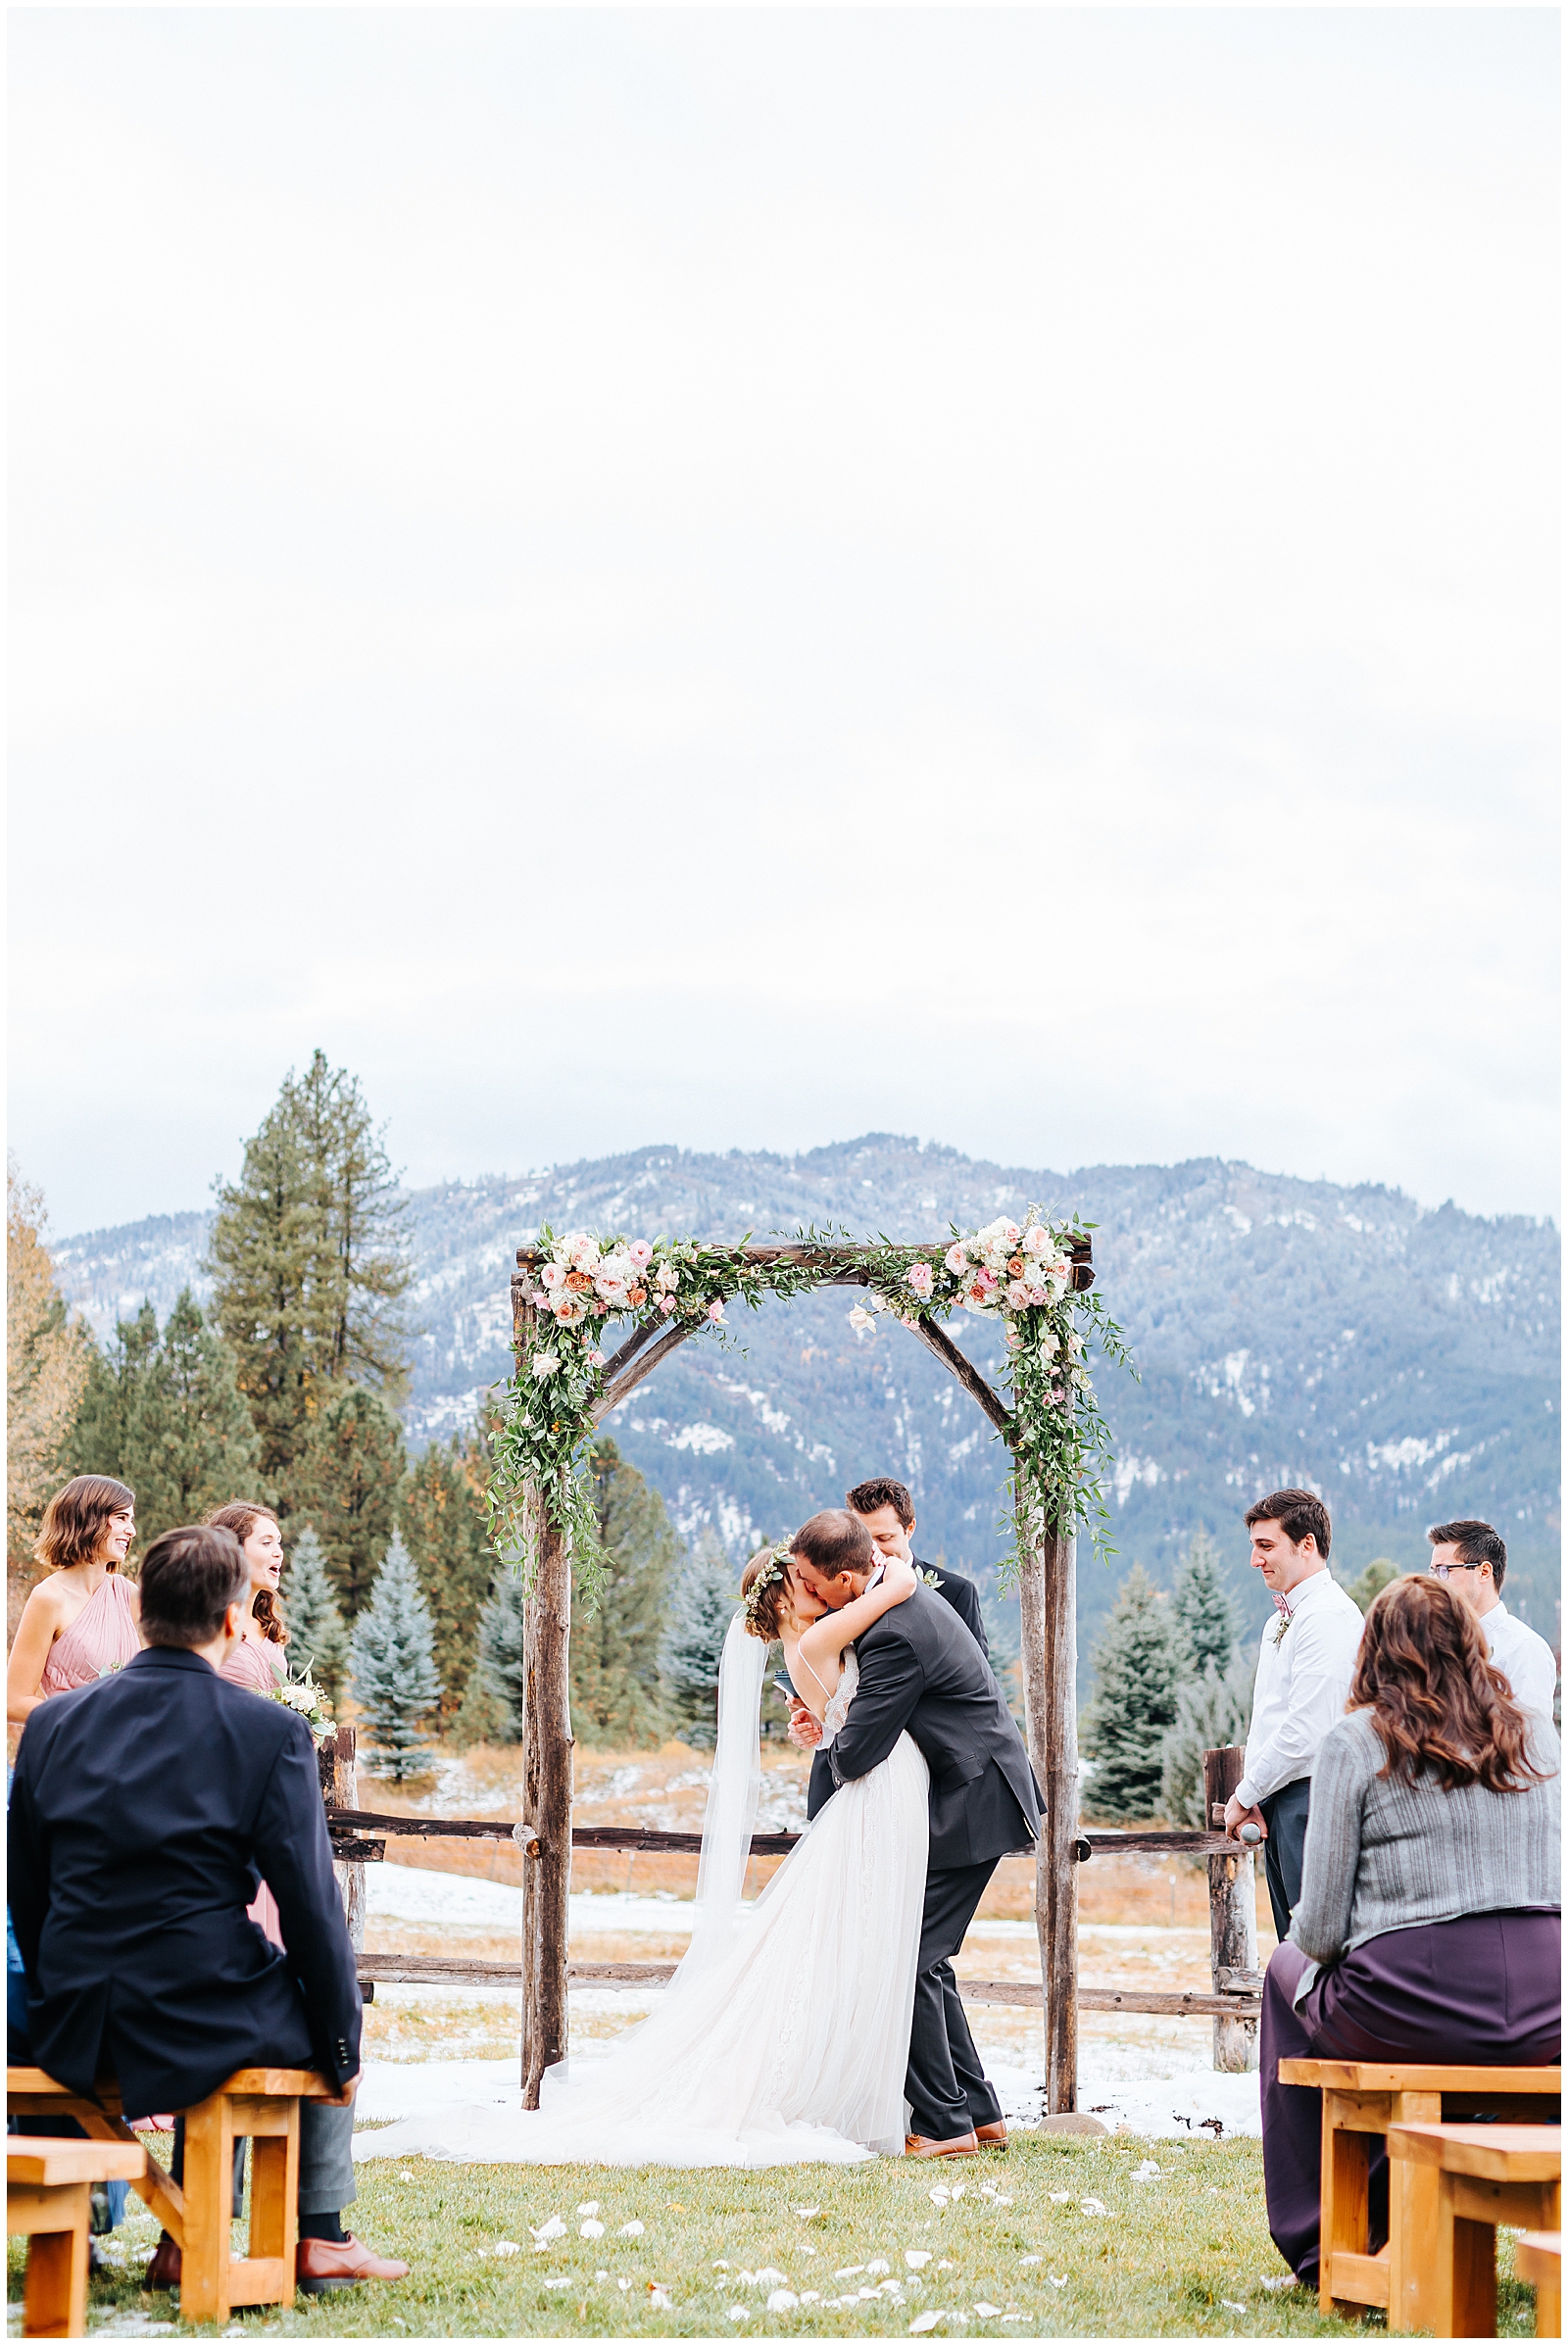 Ceremony Kiss at Mountain Backdrop Fall Wedding